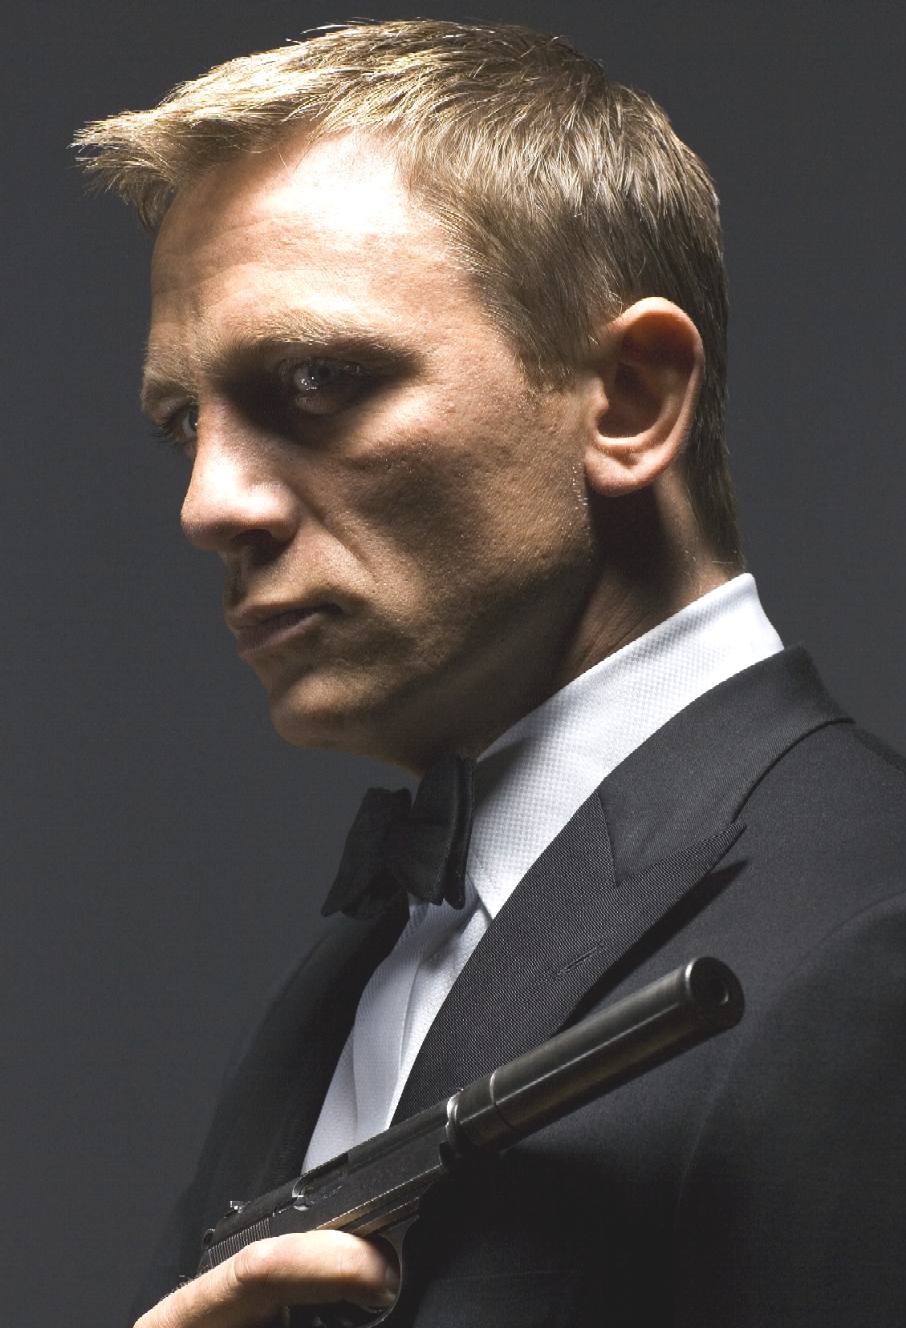 James Bond 007 in Skyfall the 2012 movie by Sam Mendes, Daniel Craig